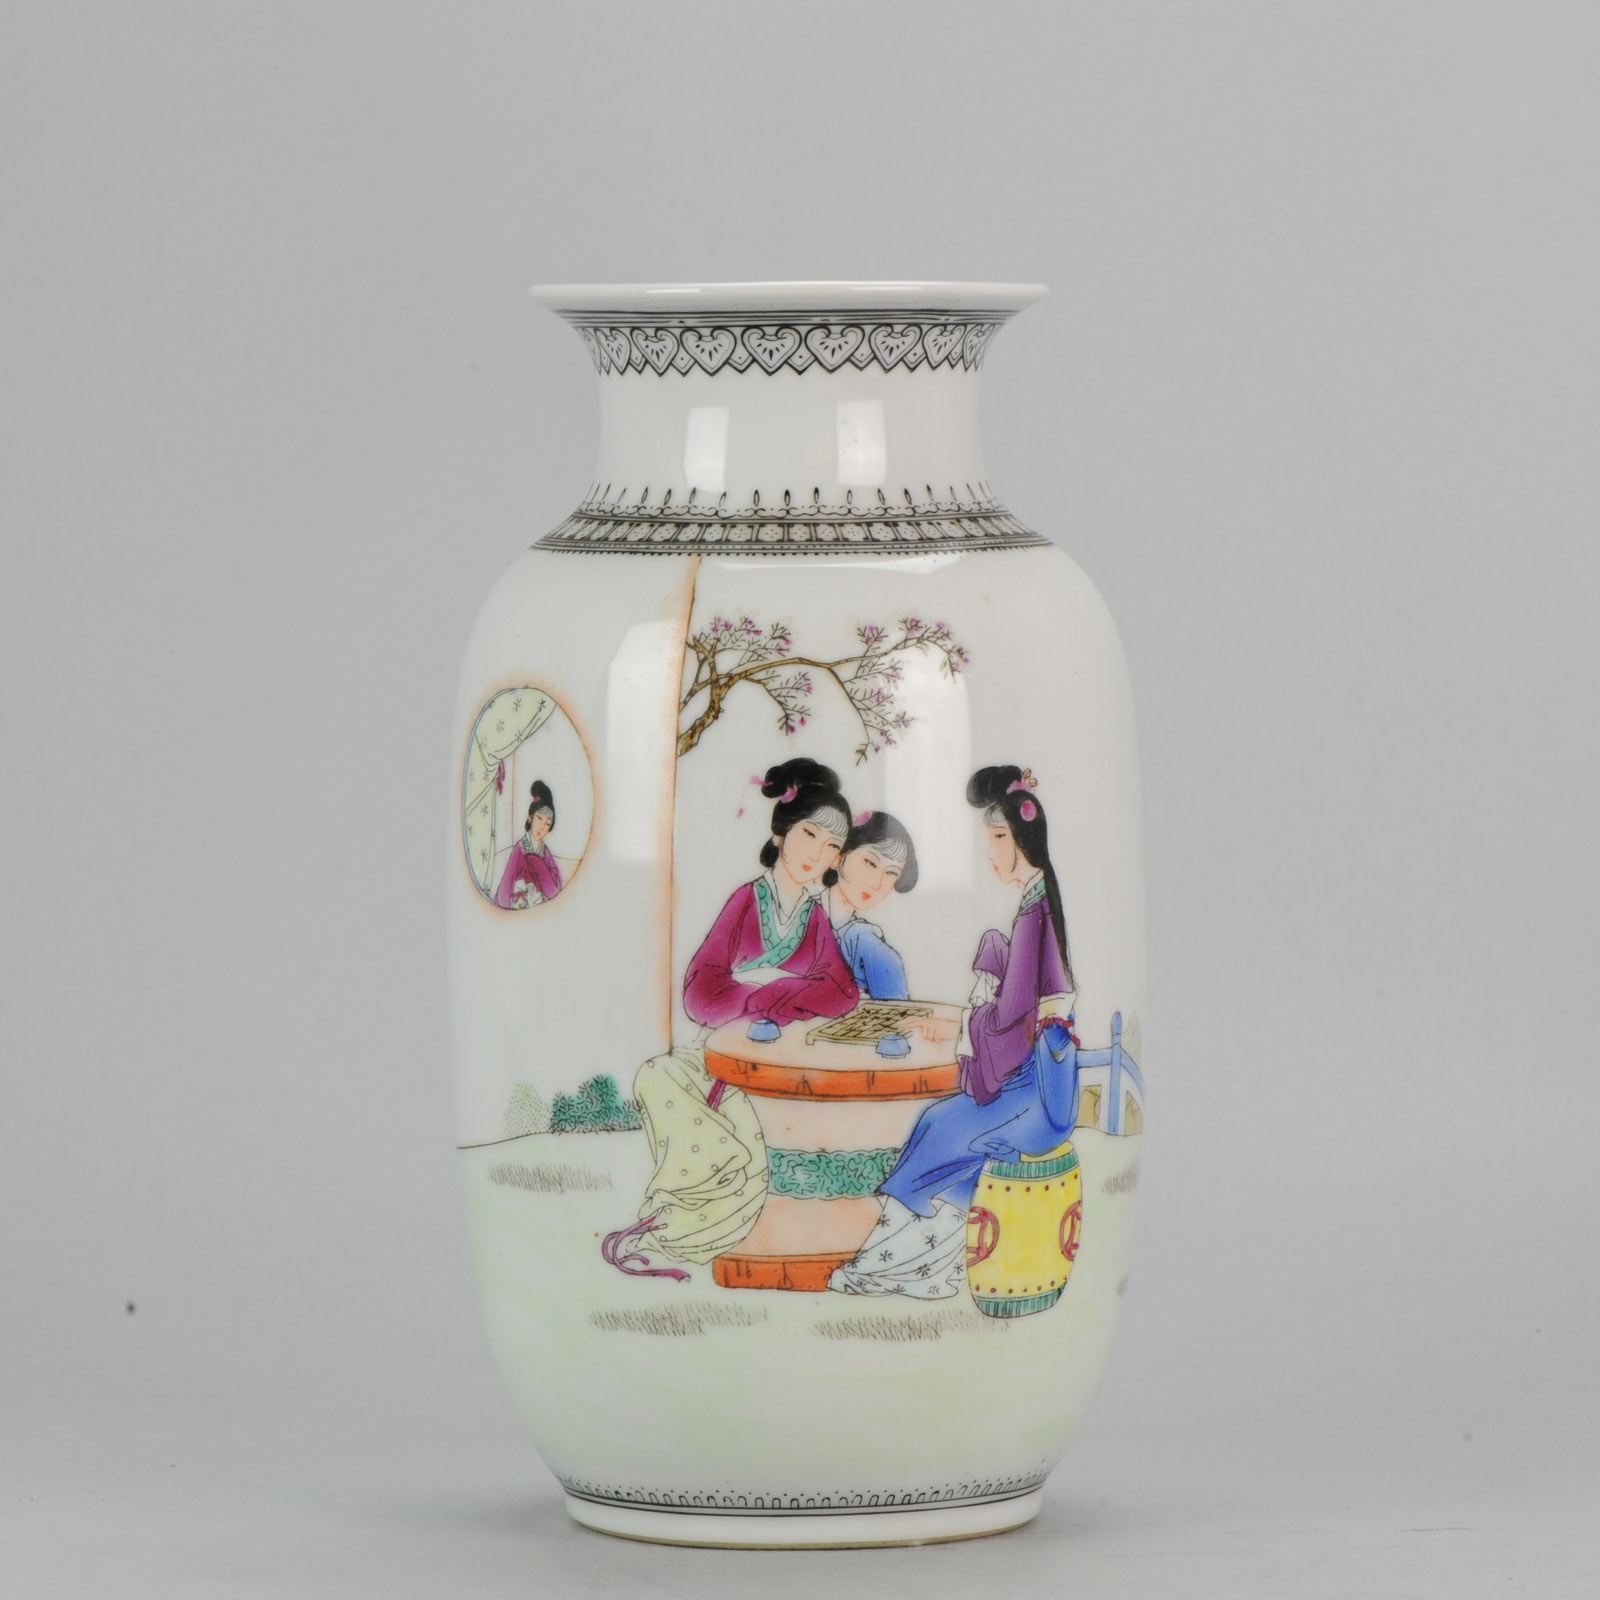 20C PROC Chinese Porcelain Vase Figures Famille Rose Garden. Marked